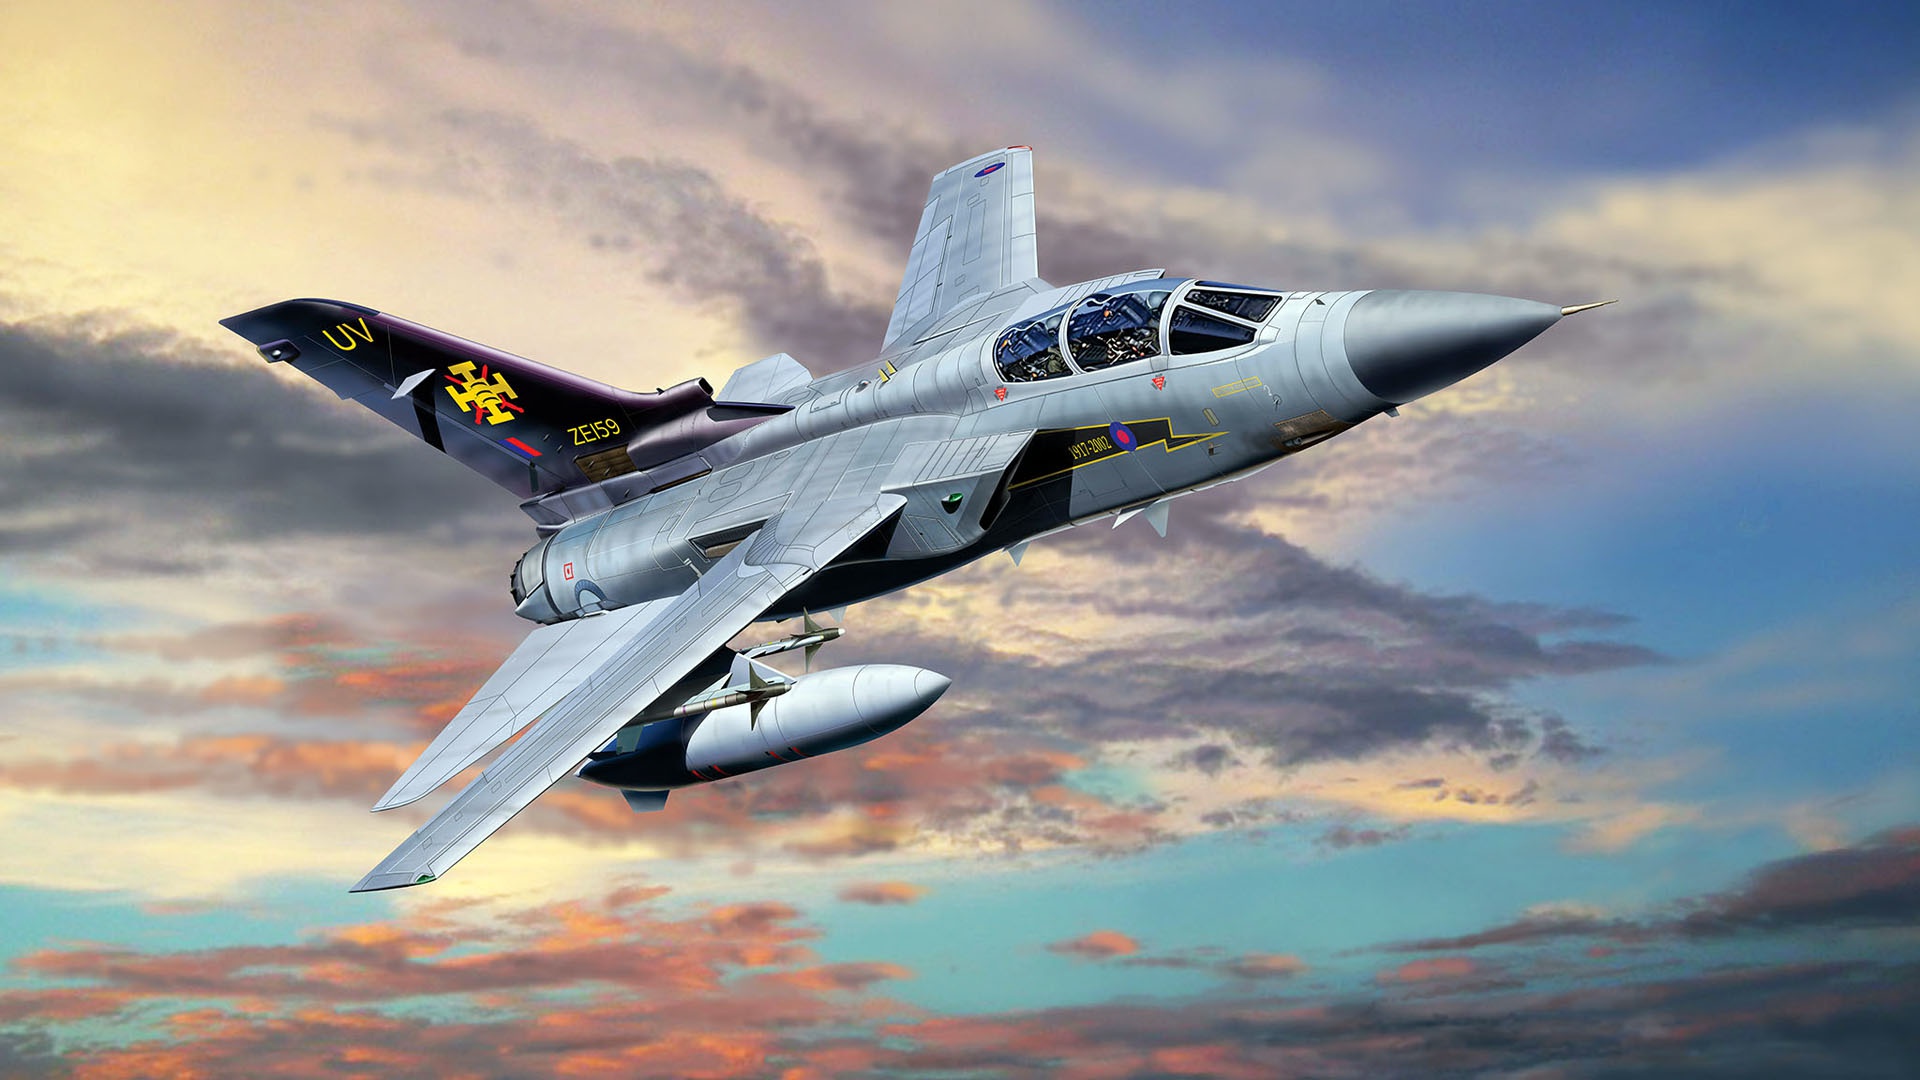 General 1920x1080 artwork vehicle military aircraft military Royal Air Force Panavia Tornado Boxart digital art jet fighter Multirole fighter